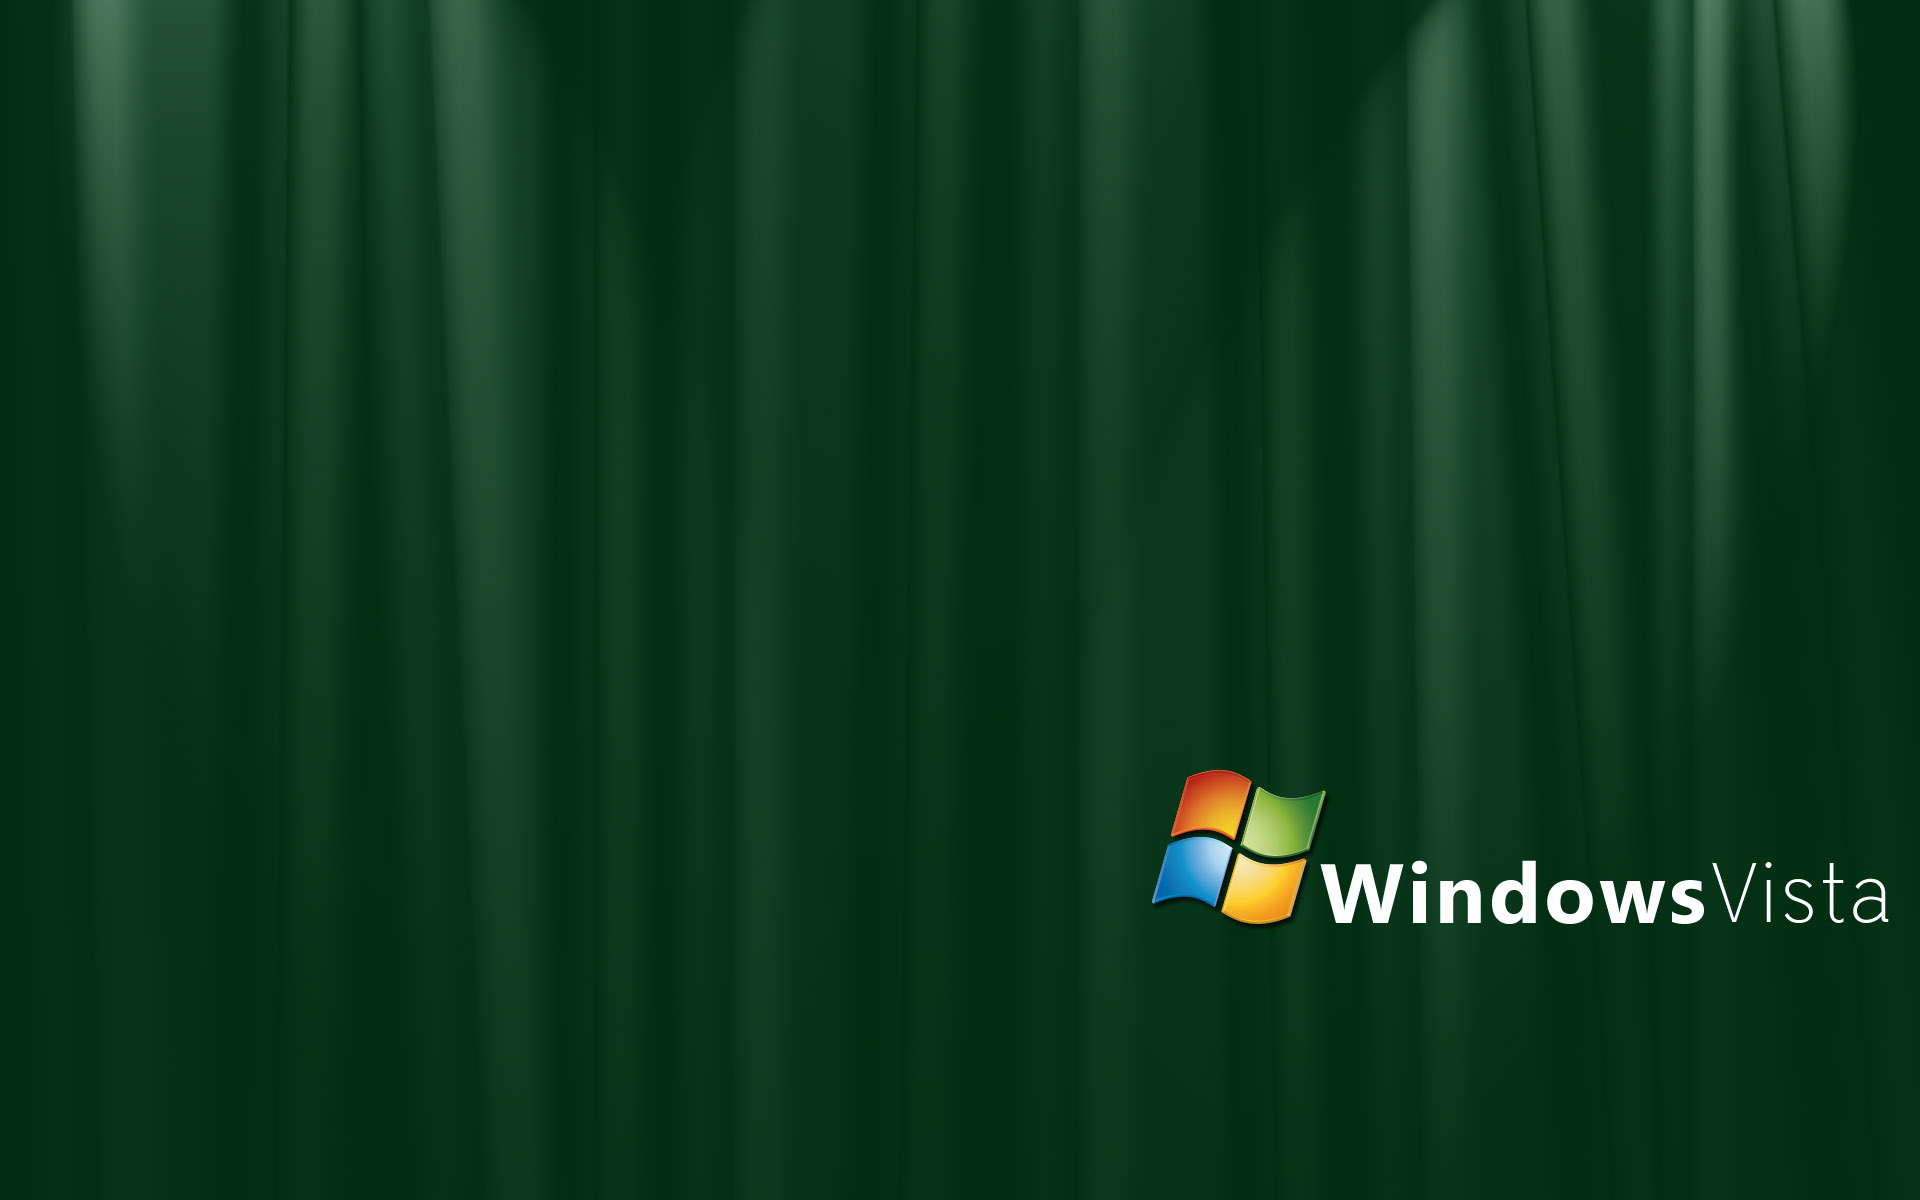 Official Windows Vista Wallpaper Hebus Org High